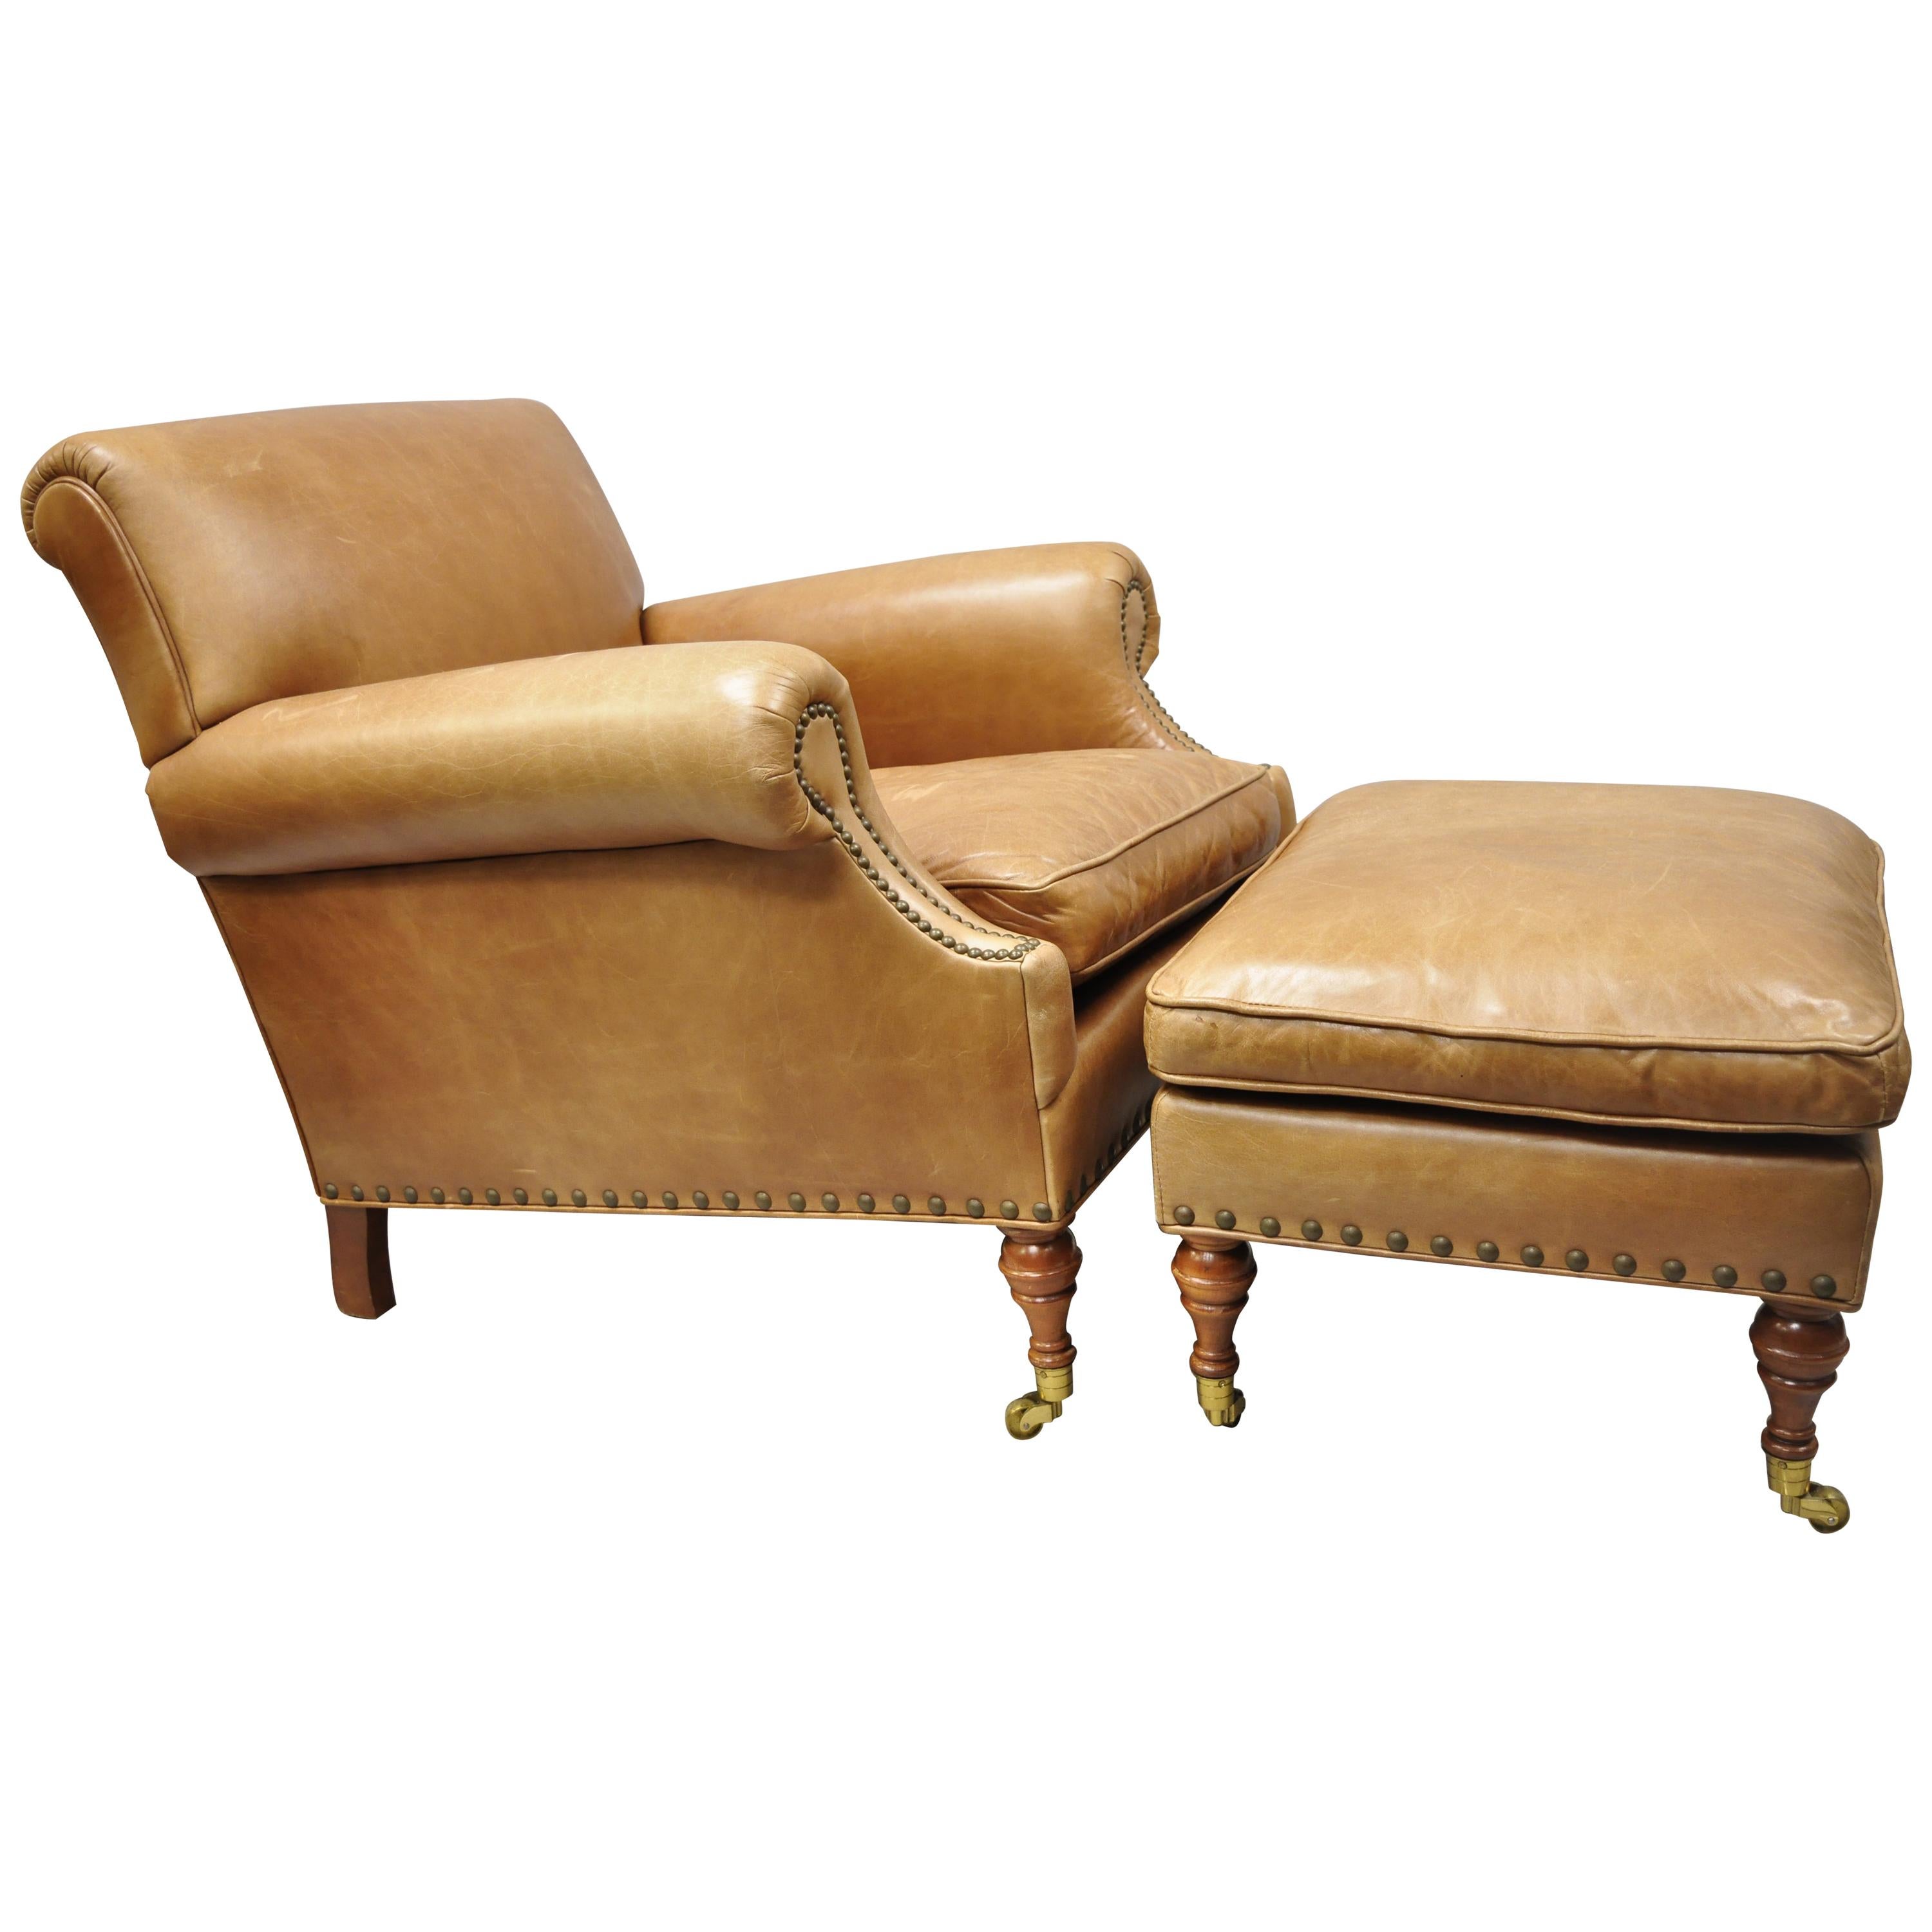 McKinley Leather English Regency Cigar Camel Leather Club Lounge Chair & Ottoman